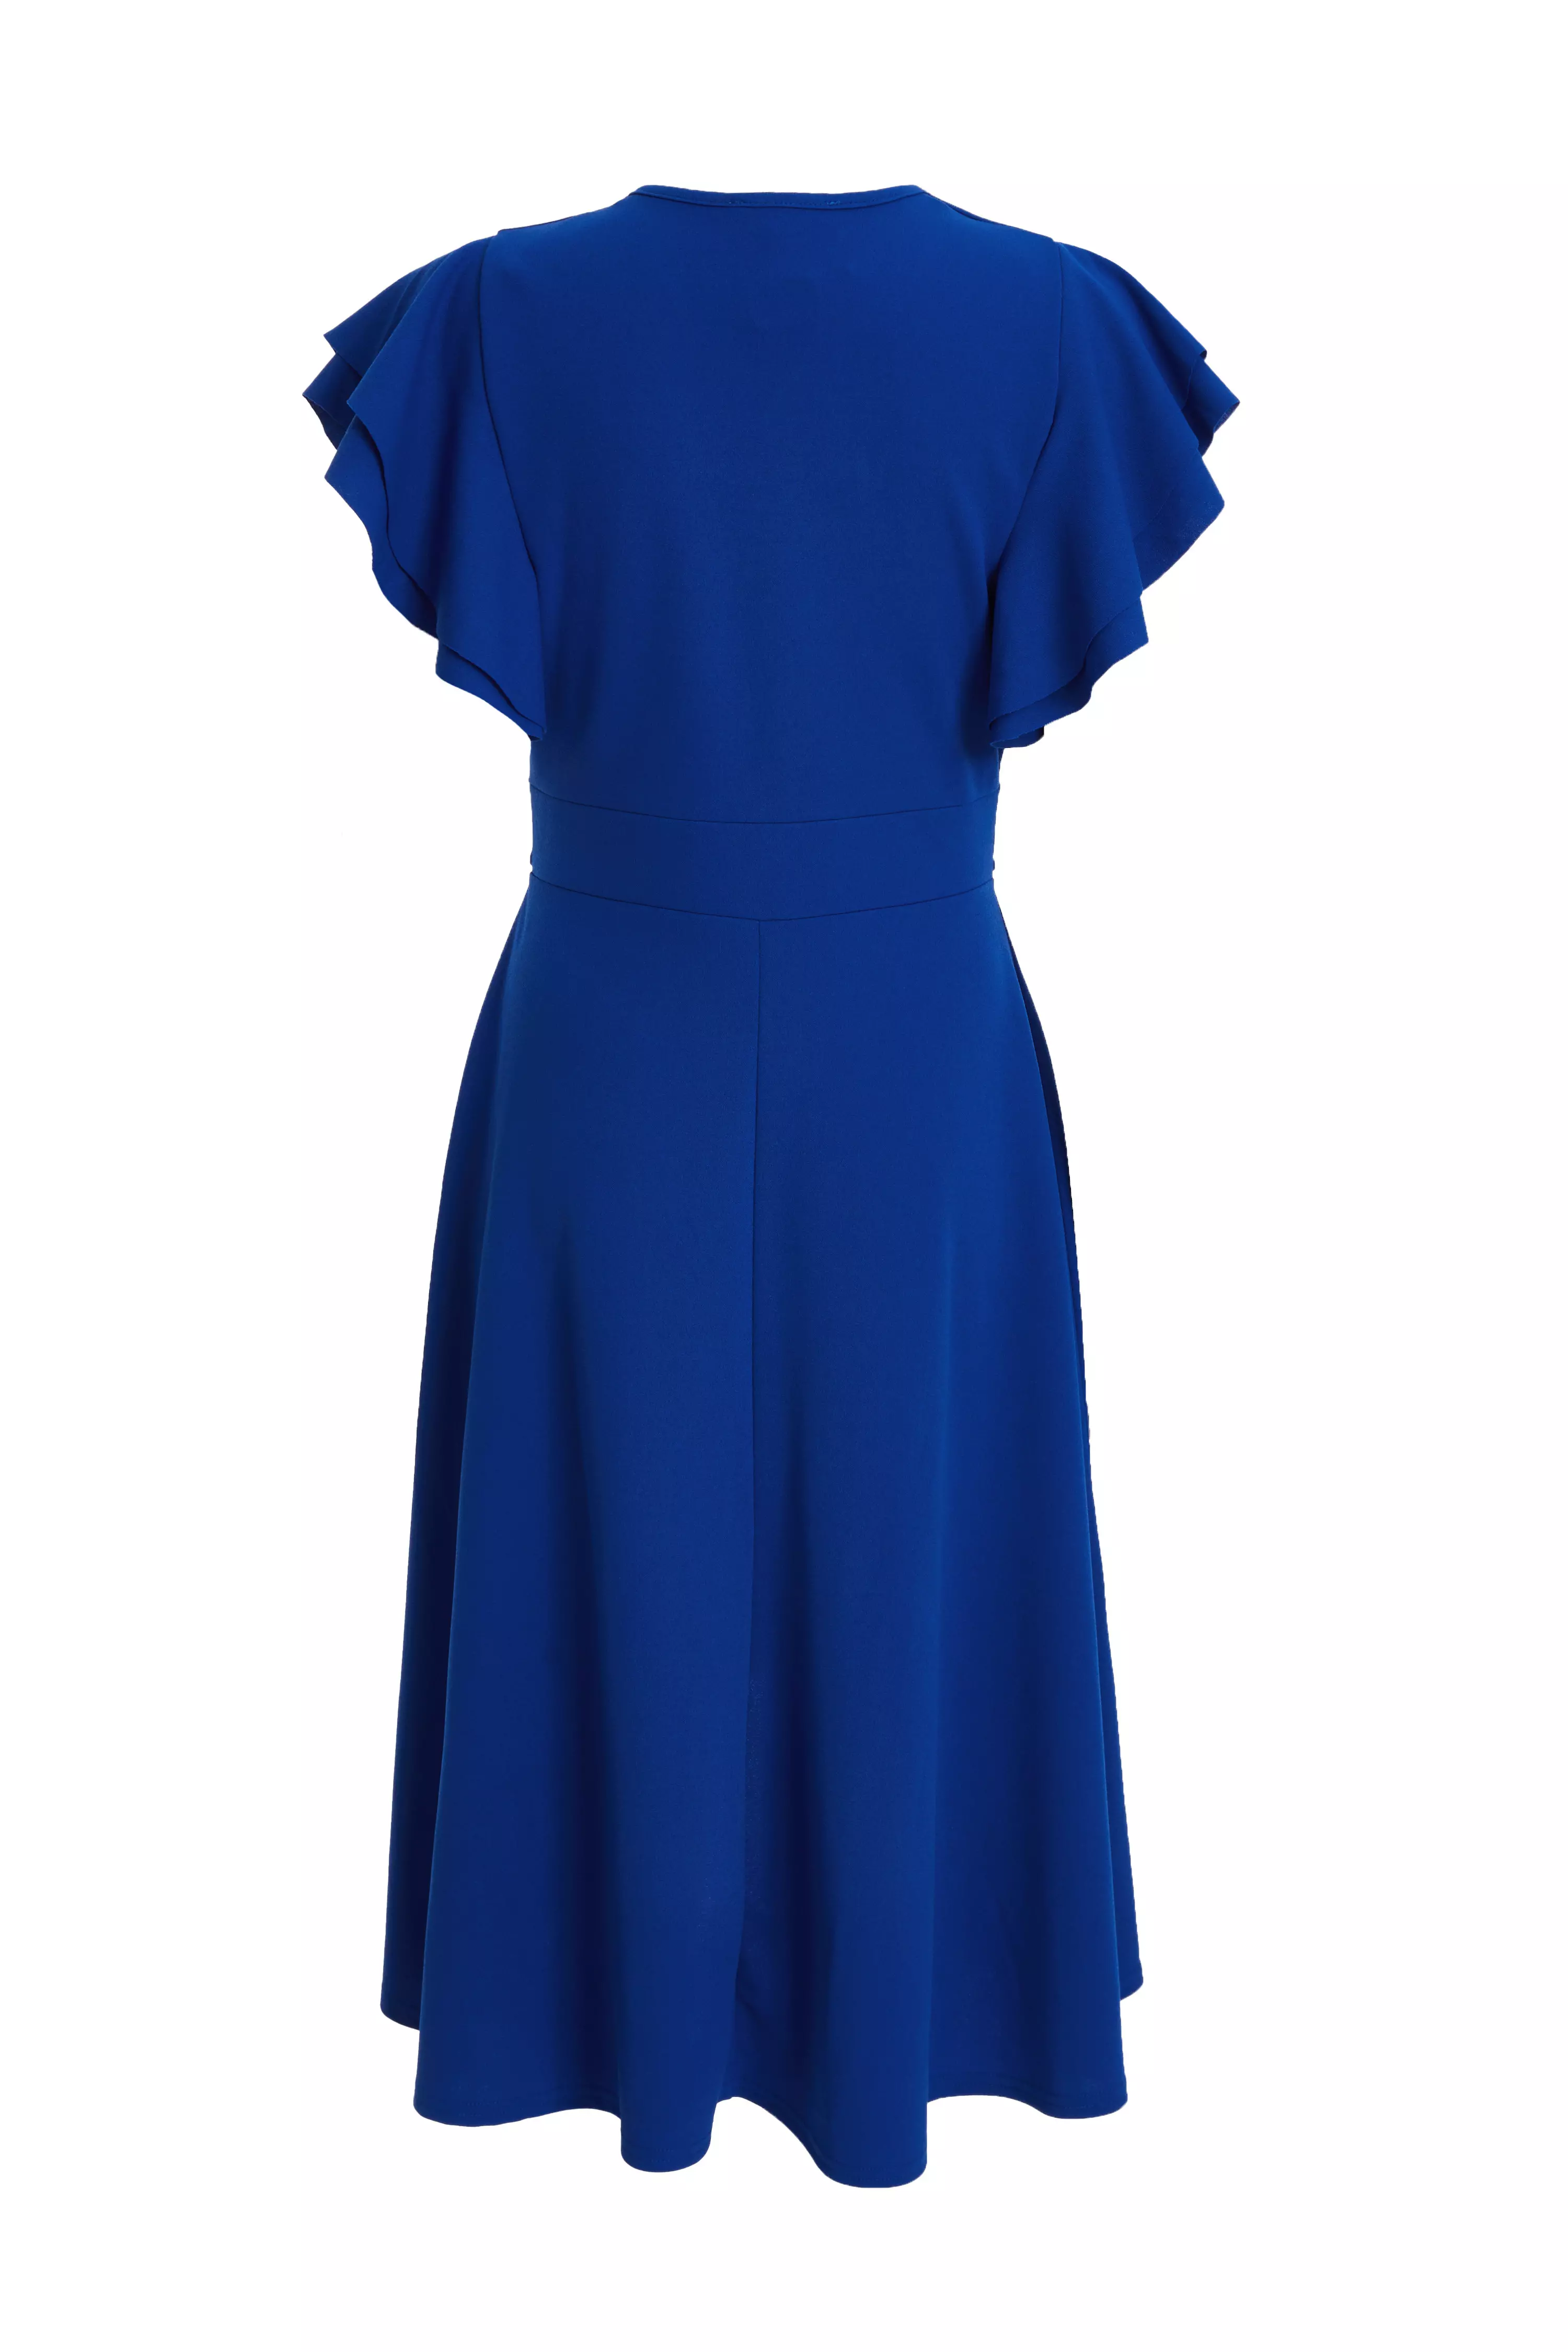 Petite Royal Blue Scuba Crepe Wrap frill Slicky Buckle Dress<!-- --> - <!--  -->QUIZ Clothing